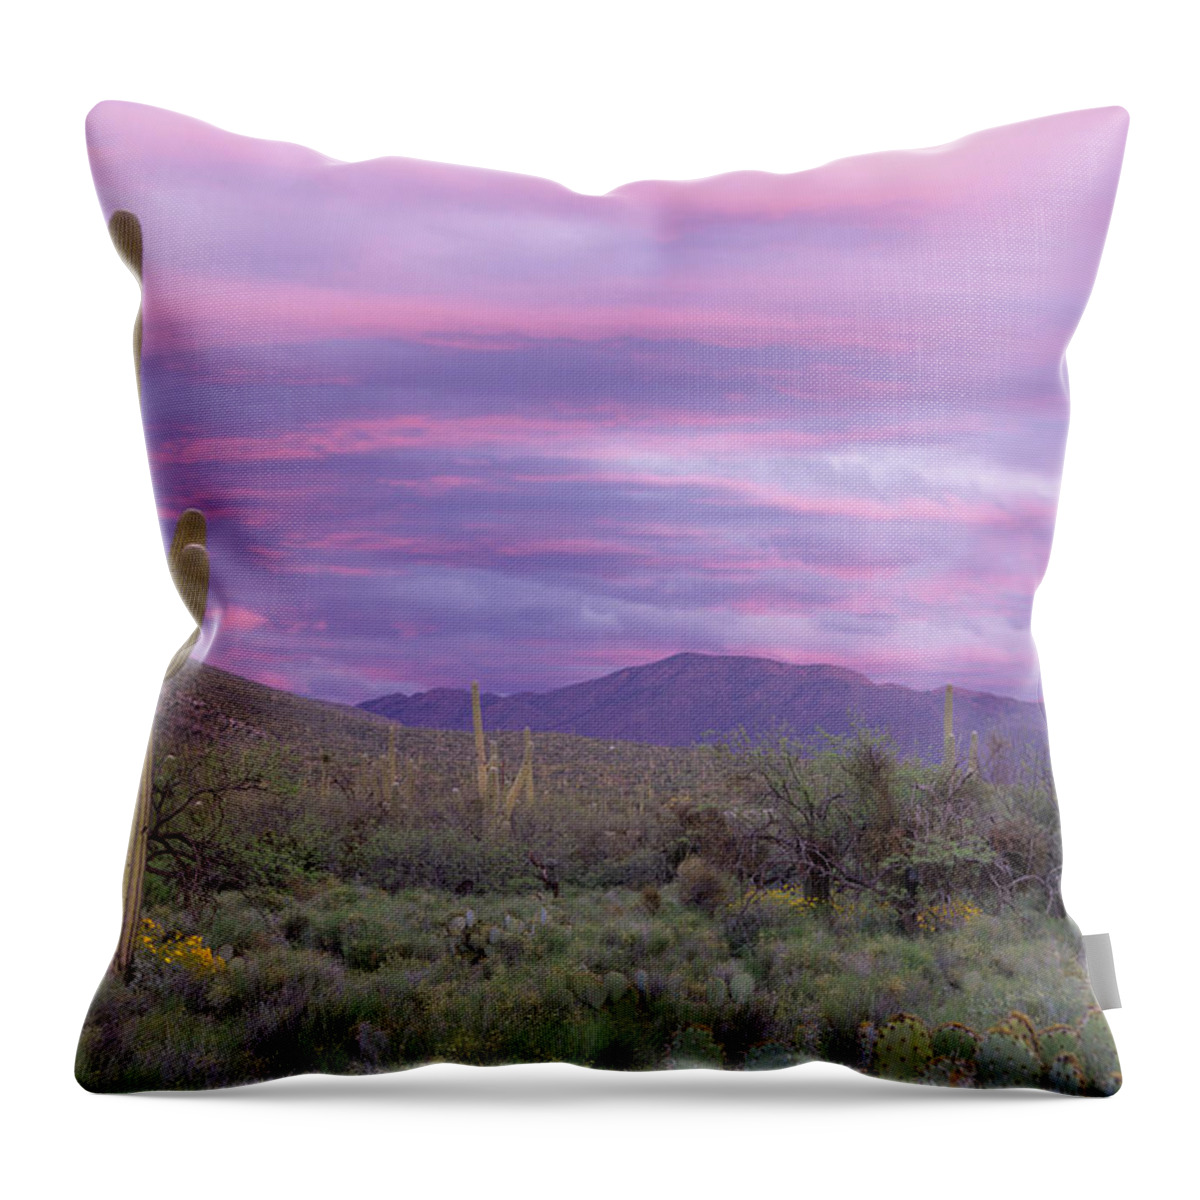 Saguaro Cactus Throw Pillow featuring the photograph Pink Sky At Sabino Canyon by Cay-uwe